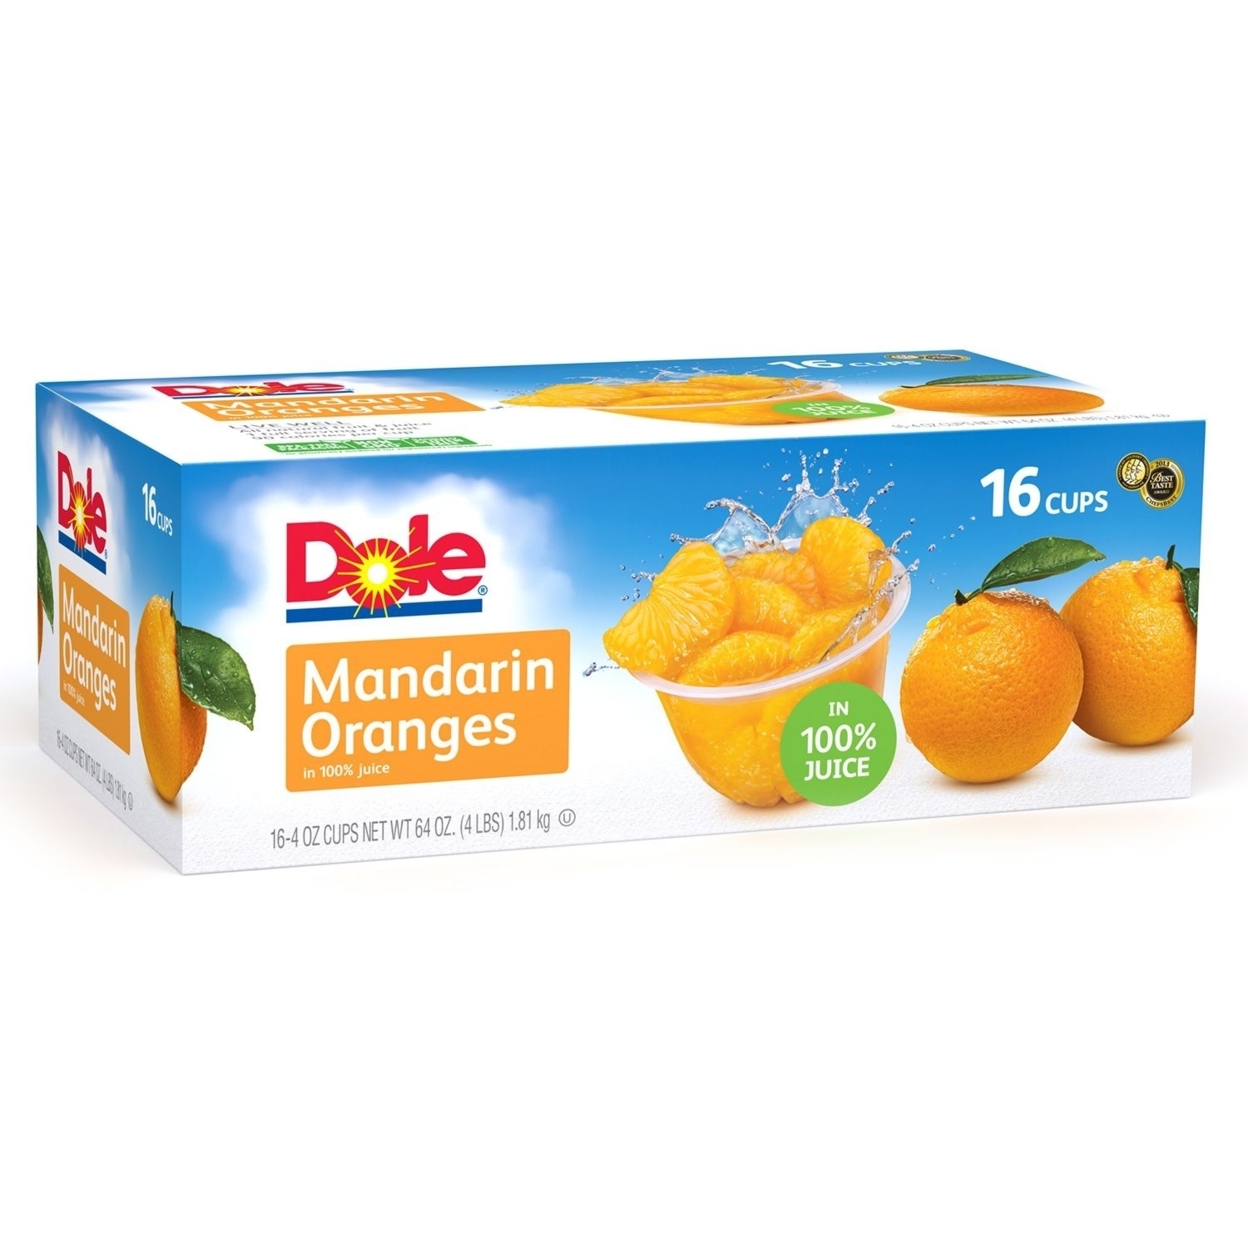 Dole Mandarin Oranges Fruit Cup, 16-4 Ounce Cups